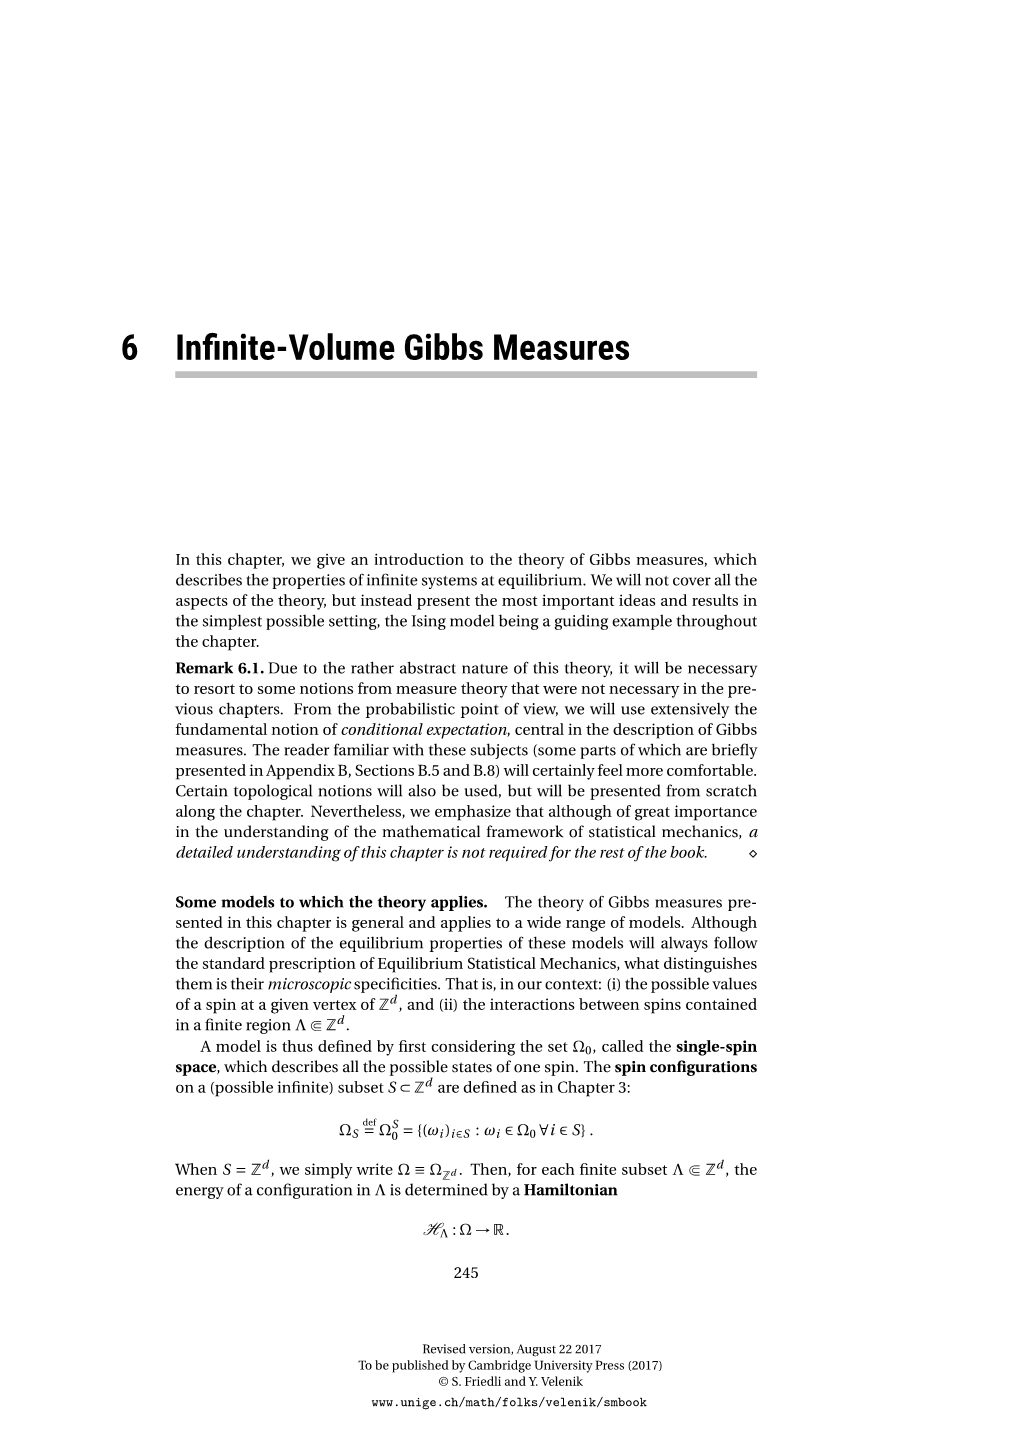 Infinite-Volume Gibbs Measures